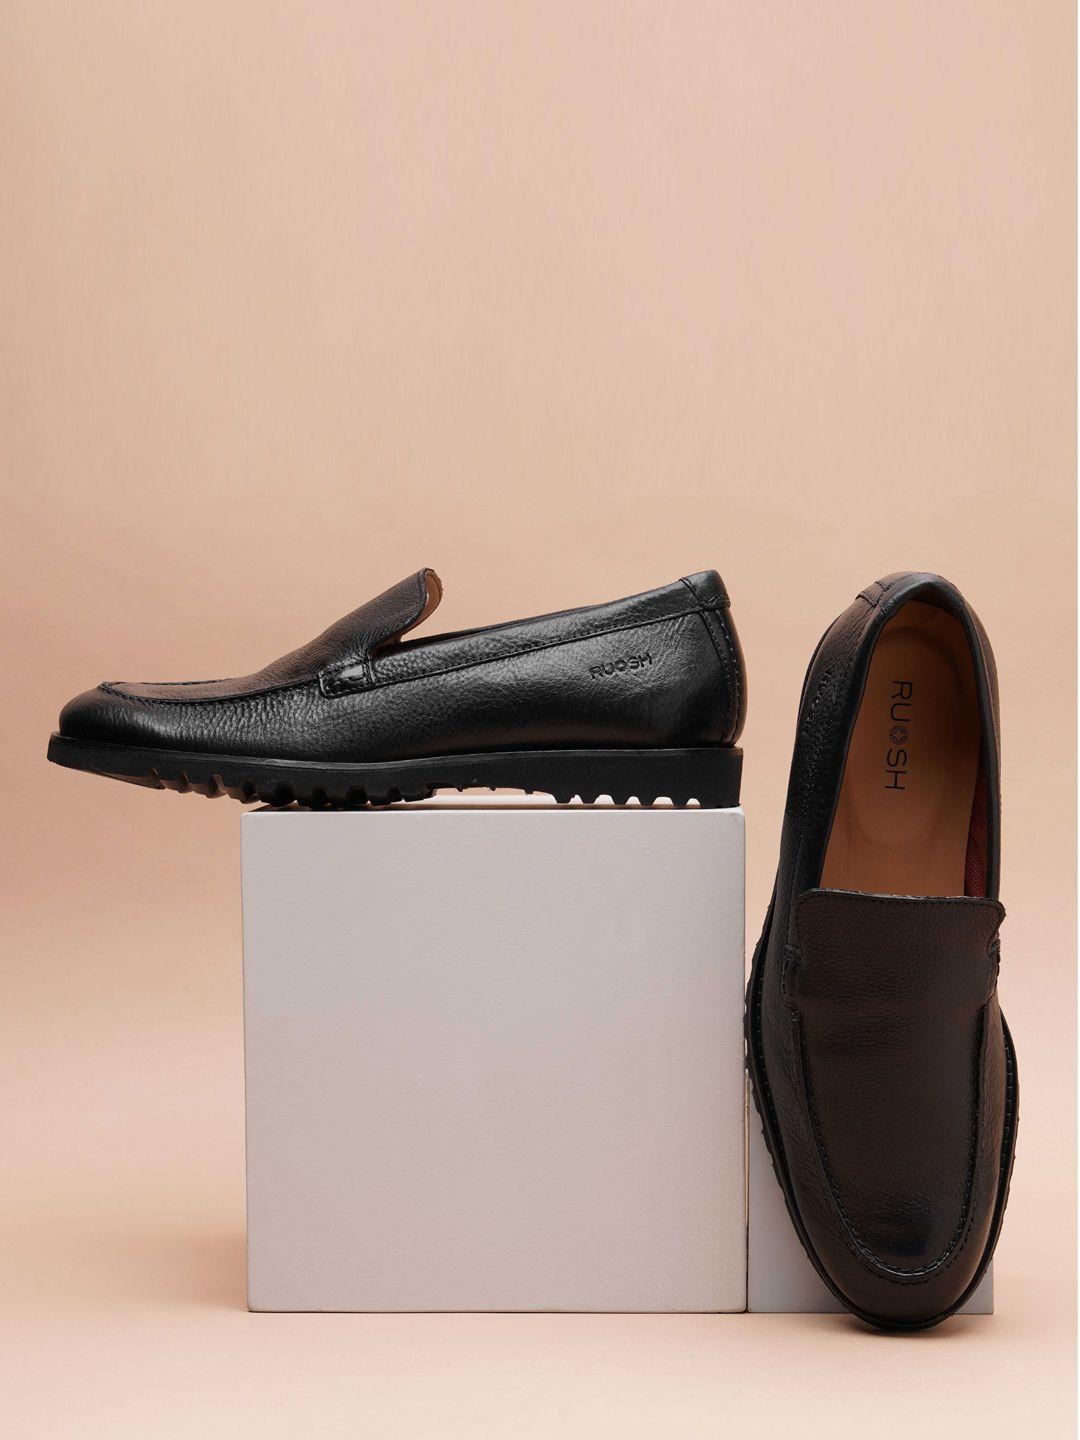 ruosh-men-textured-lightweight-comfort-insole-leather-basics-loafers